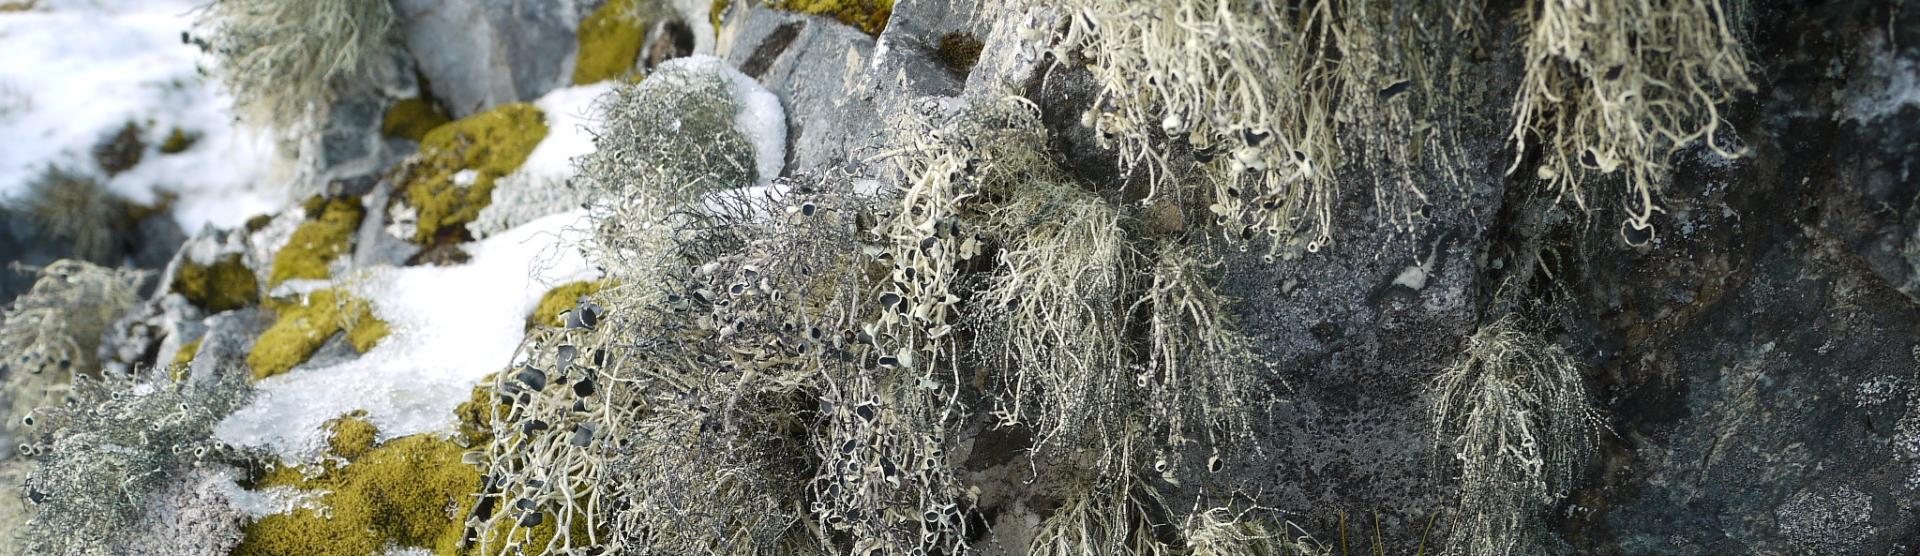 Antarctic lichens